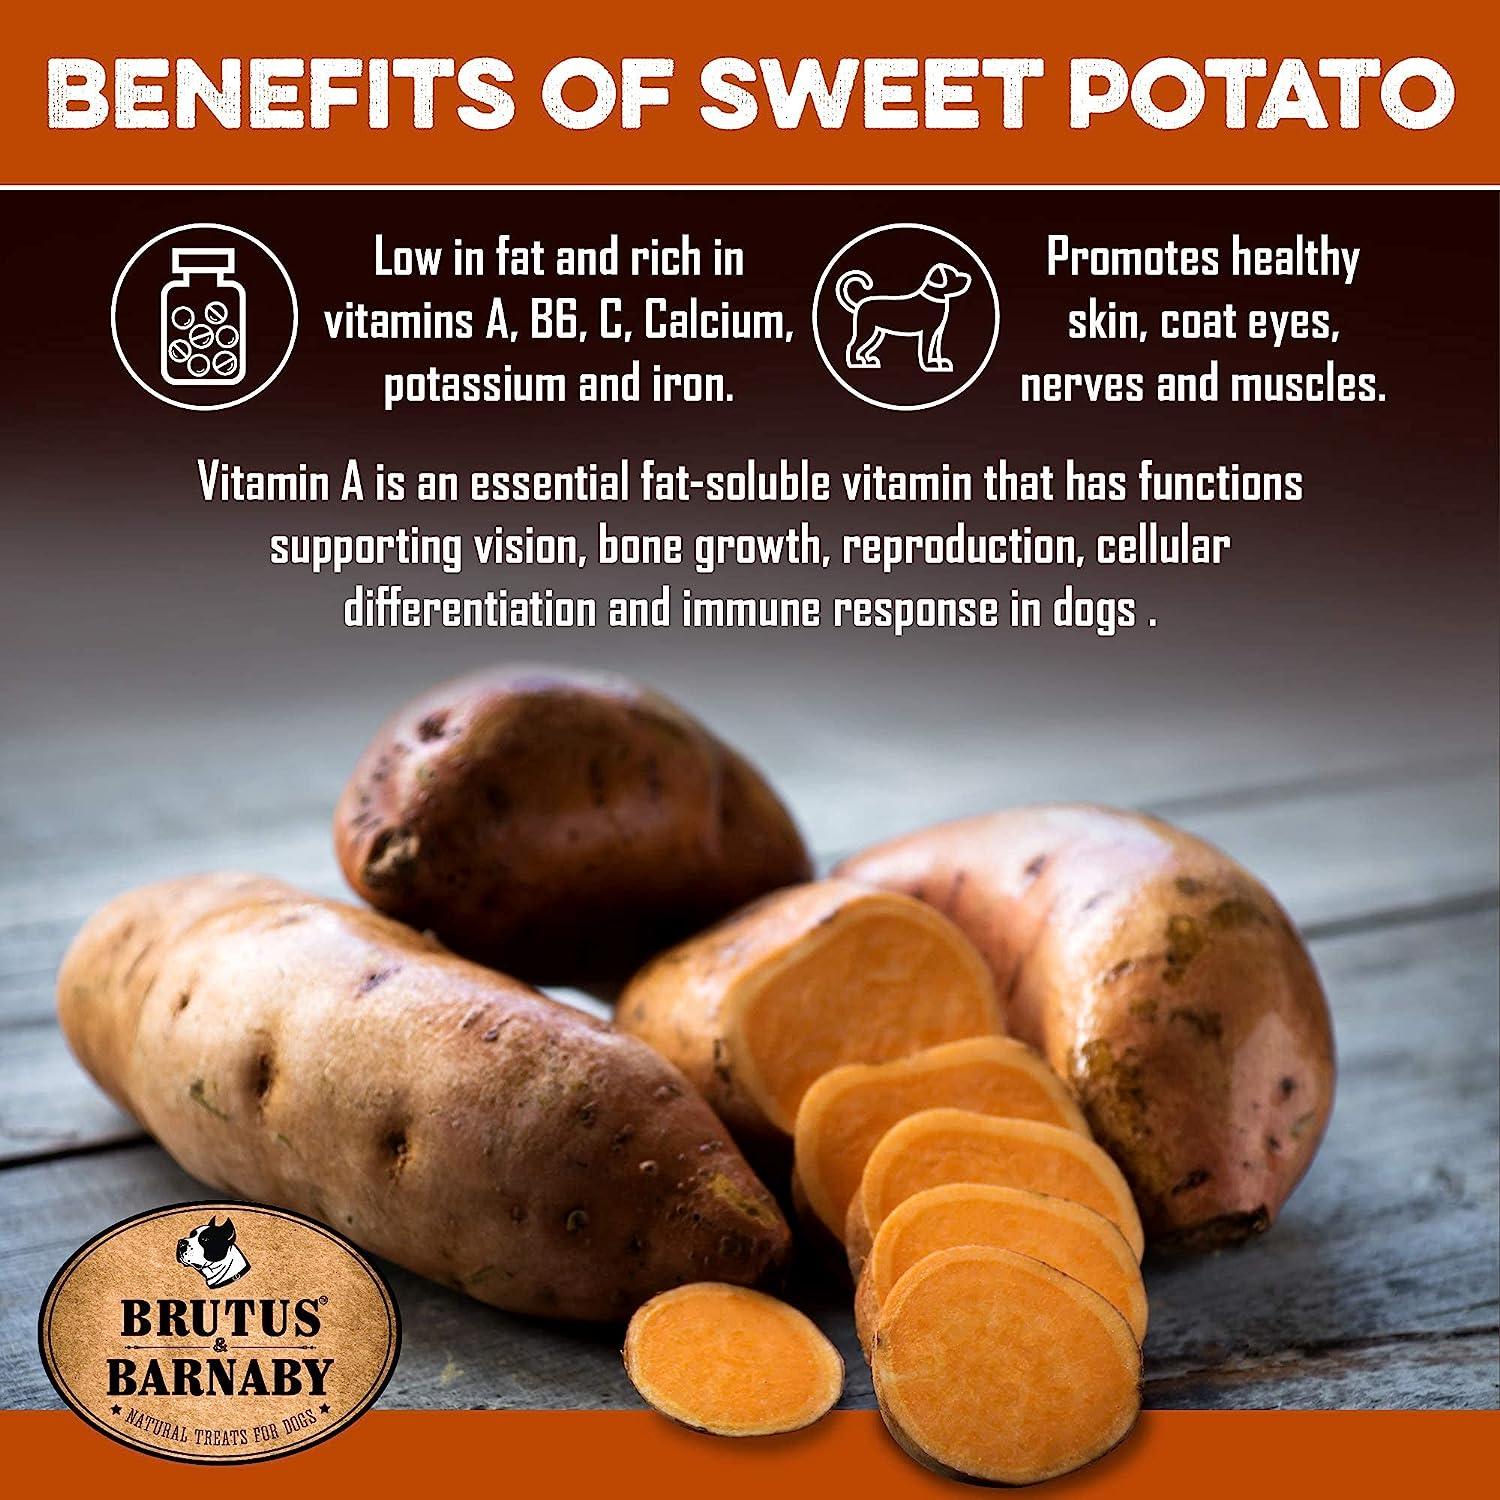 Sweet Potato Apple & Cinnamon Sticks For Dogs - Brutus & Barnaby